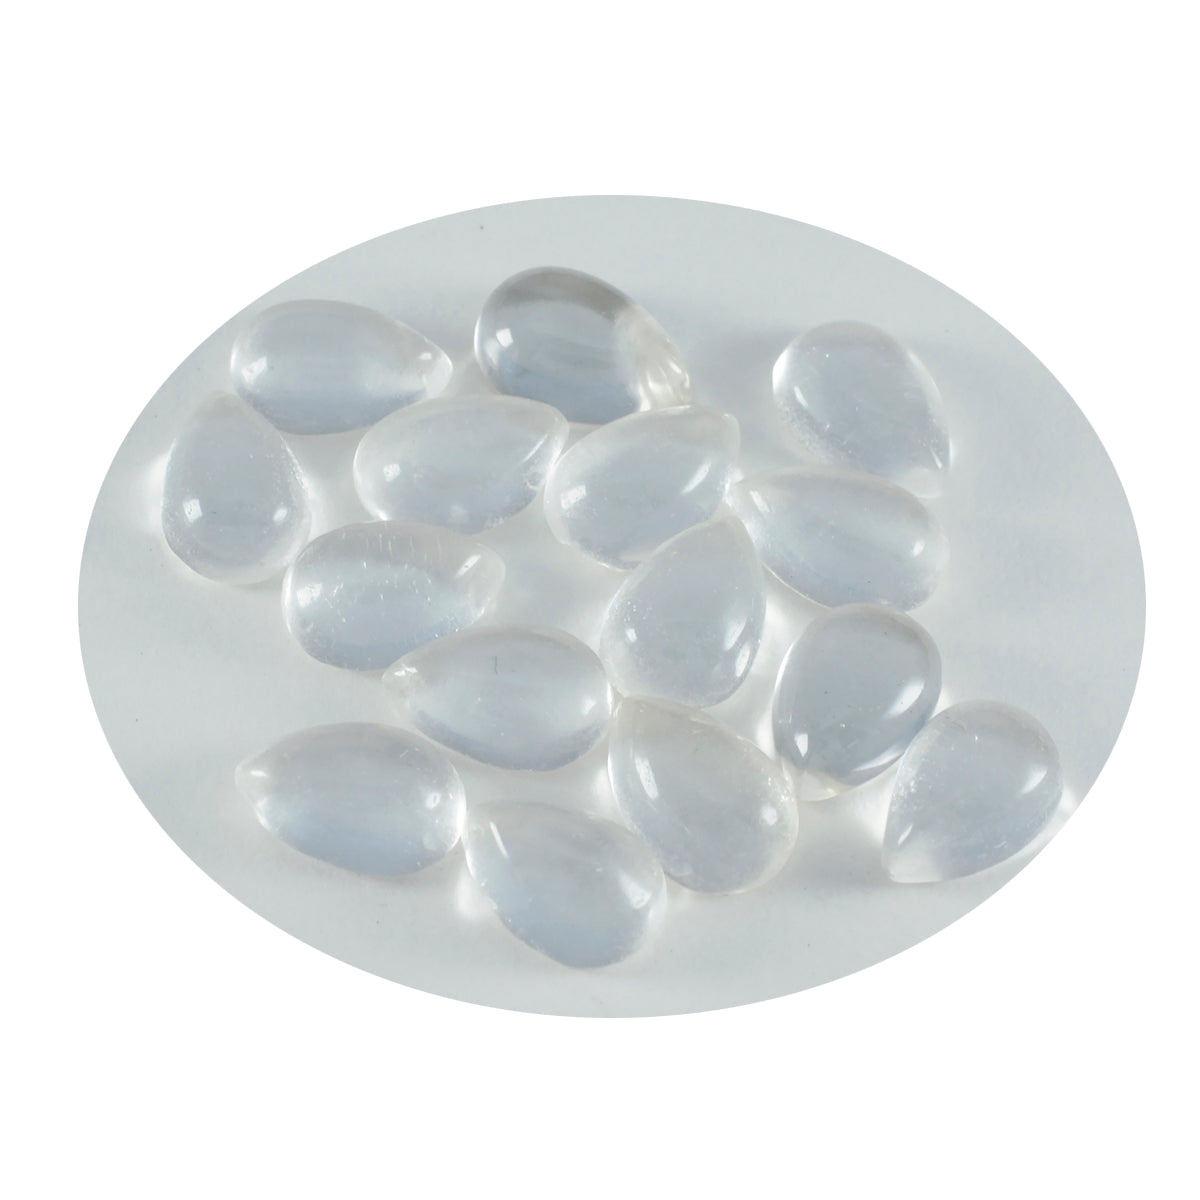 Riyogems 1PC White Crystal Quartz Cabochon 6x9 mm Pear Shape awesome Quality Gem